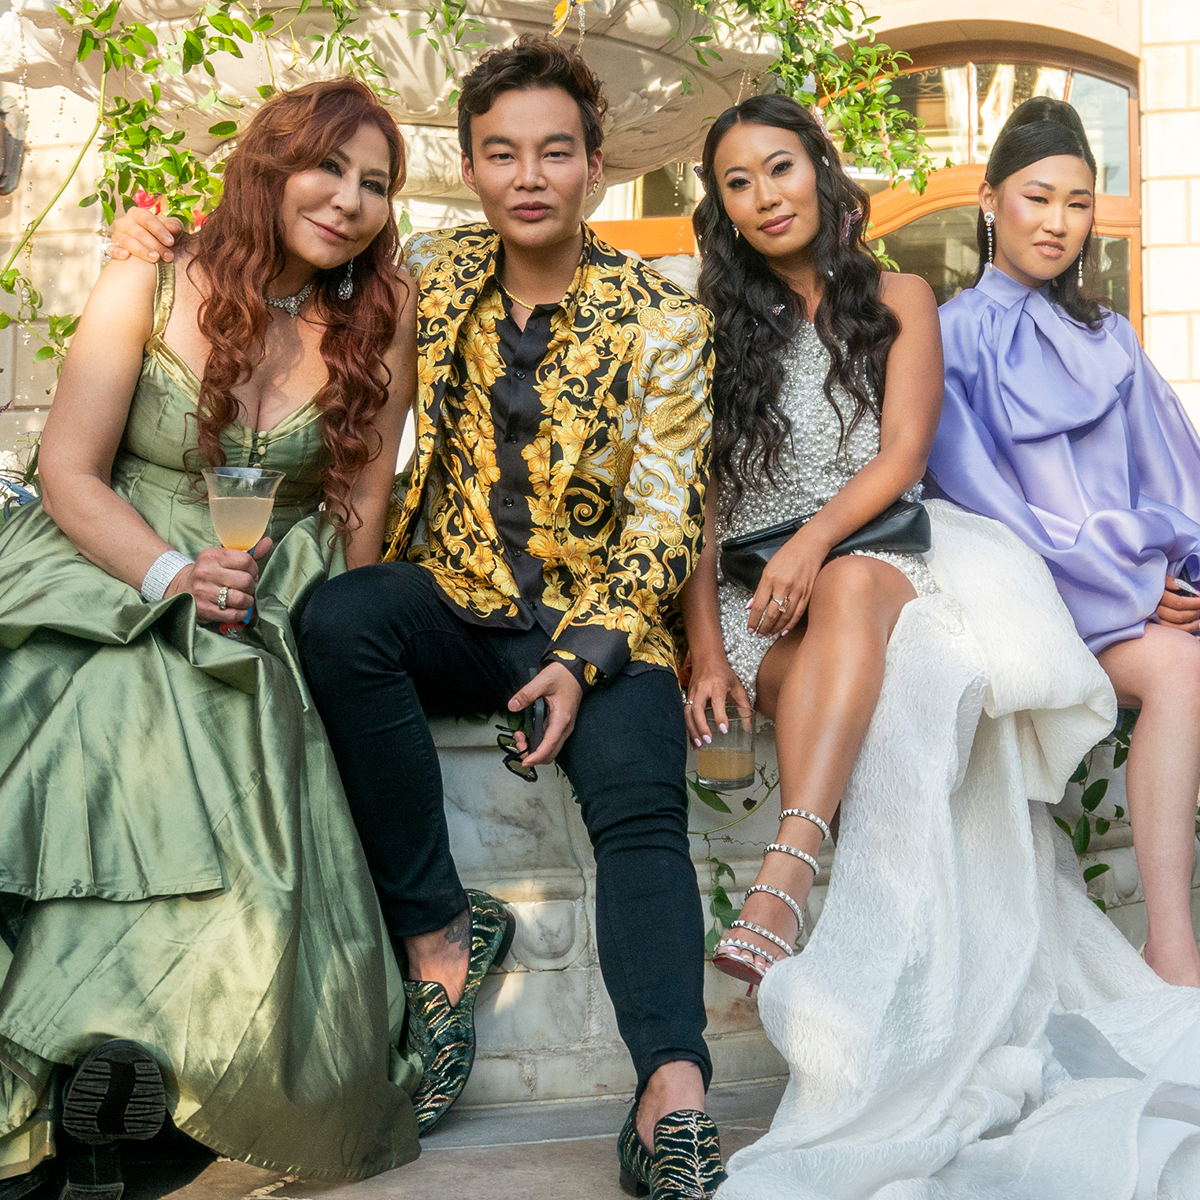 Bling Empire' Cast Instagram Accounts: Mimi, Dorothy, Anna, Kim